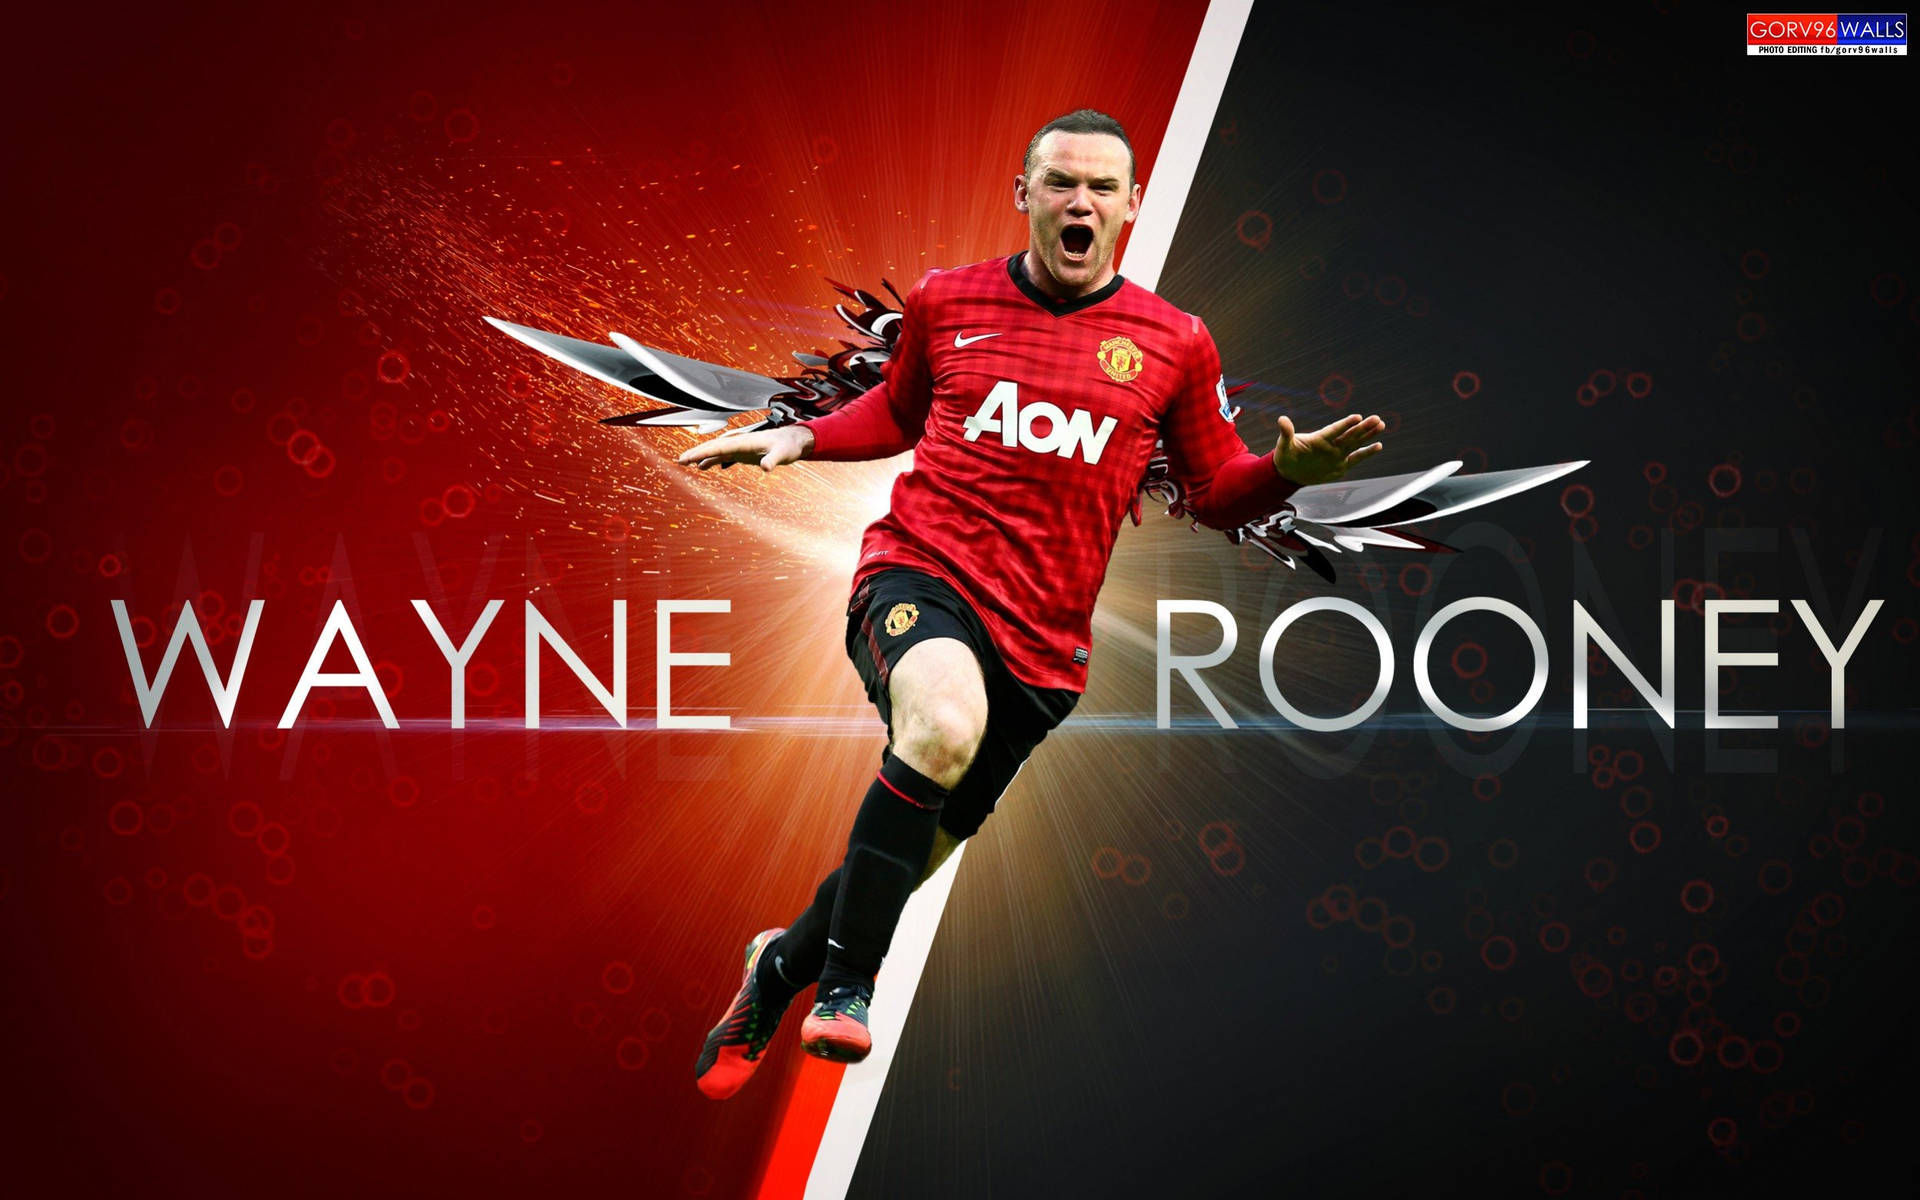 Wayne Rooney Digital Art Background